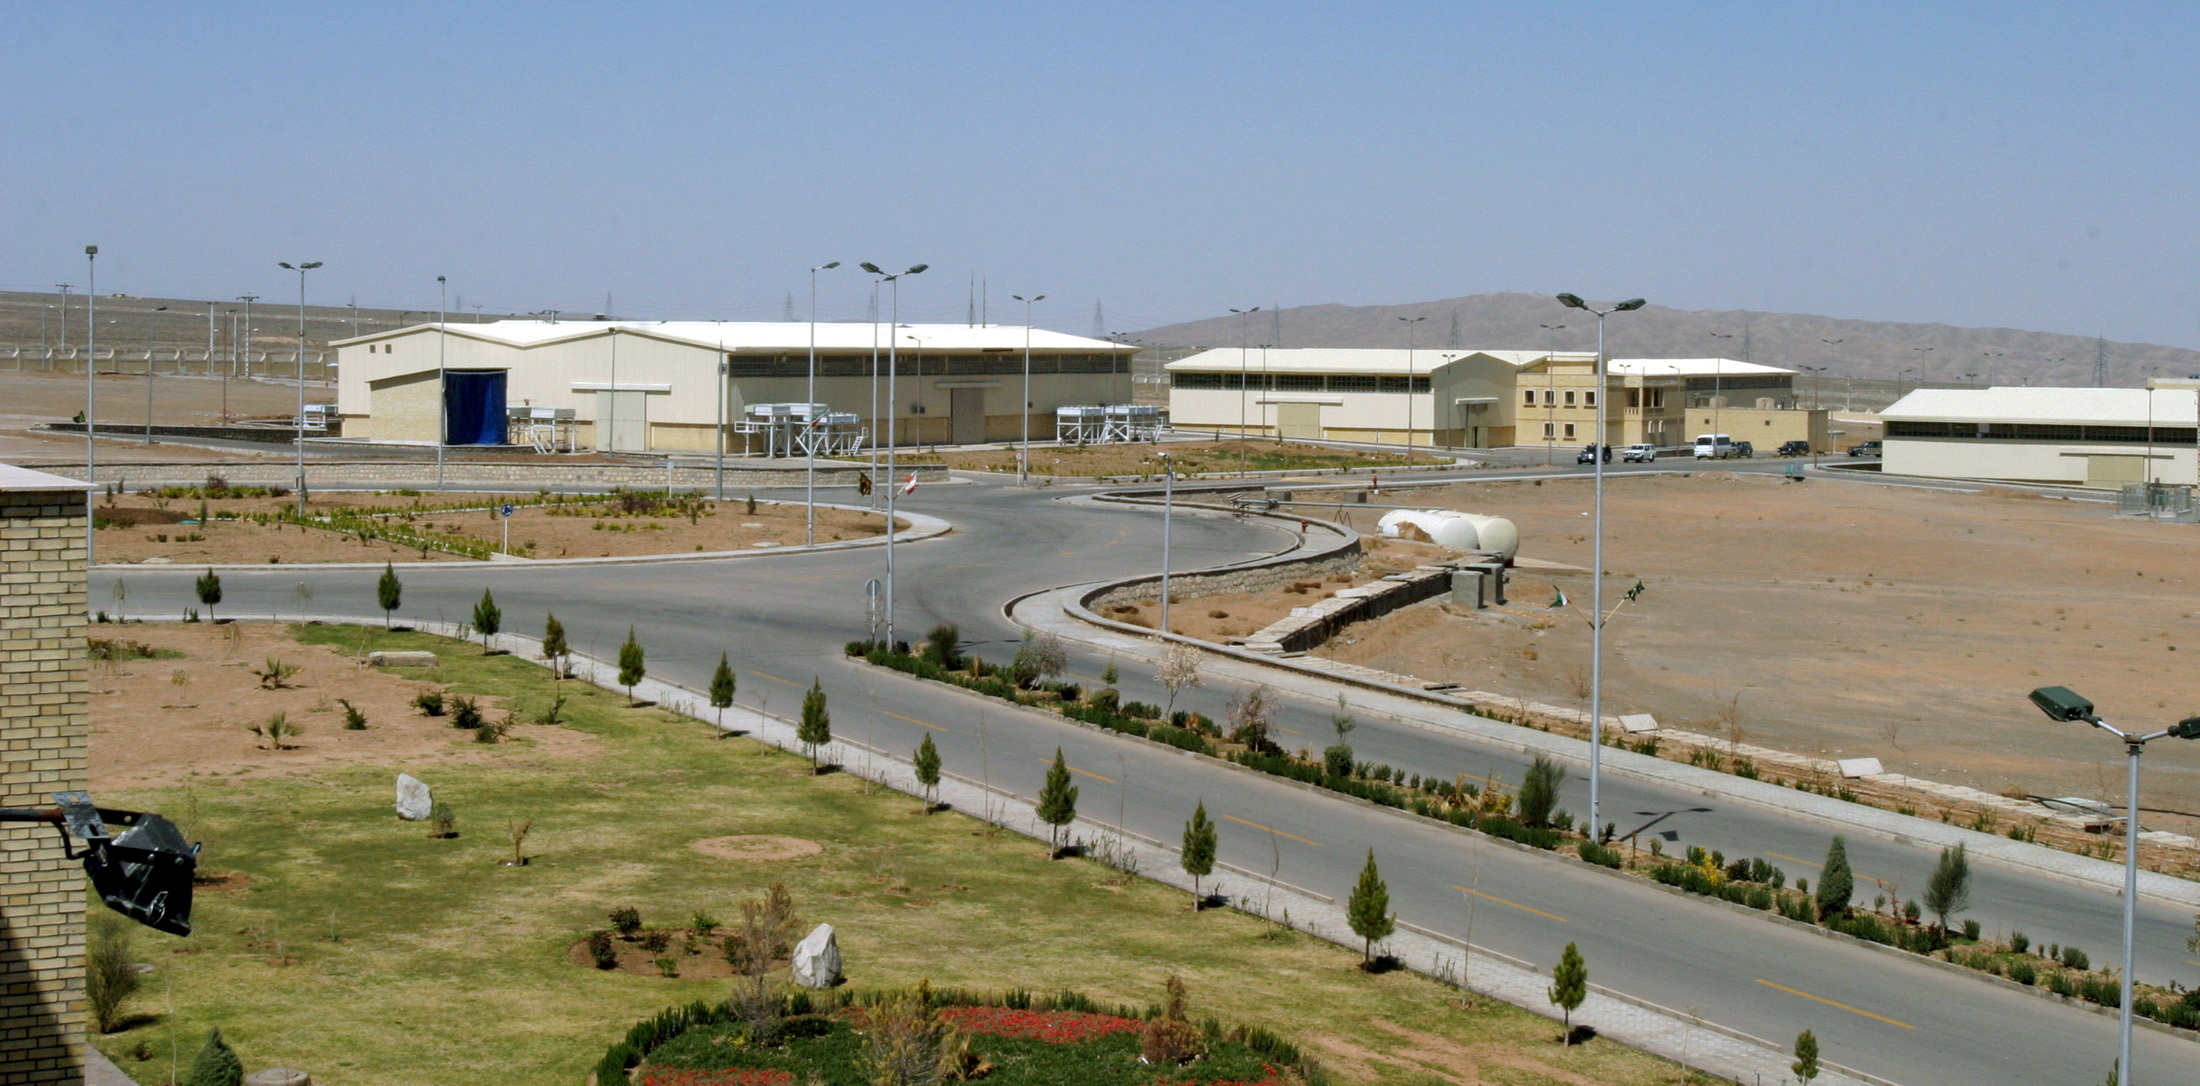 : A view of the Natanz uranium enrichment facility 250 km (155 miles) south of the Iranian capital Tehran